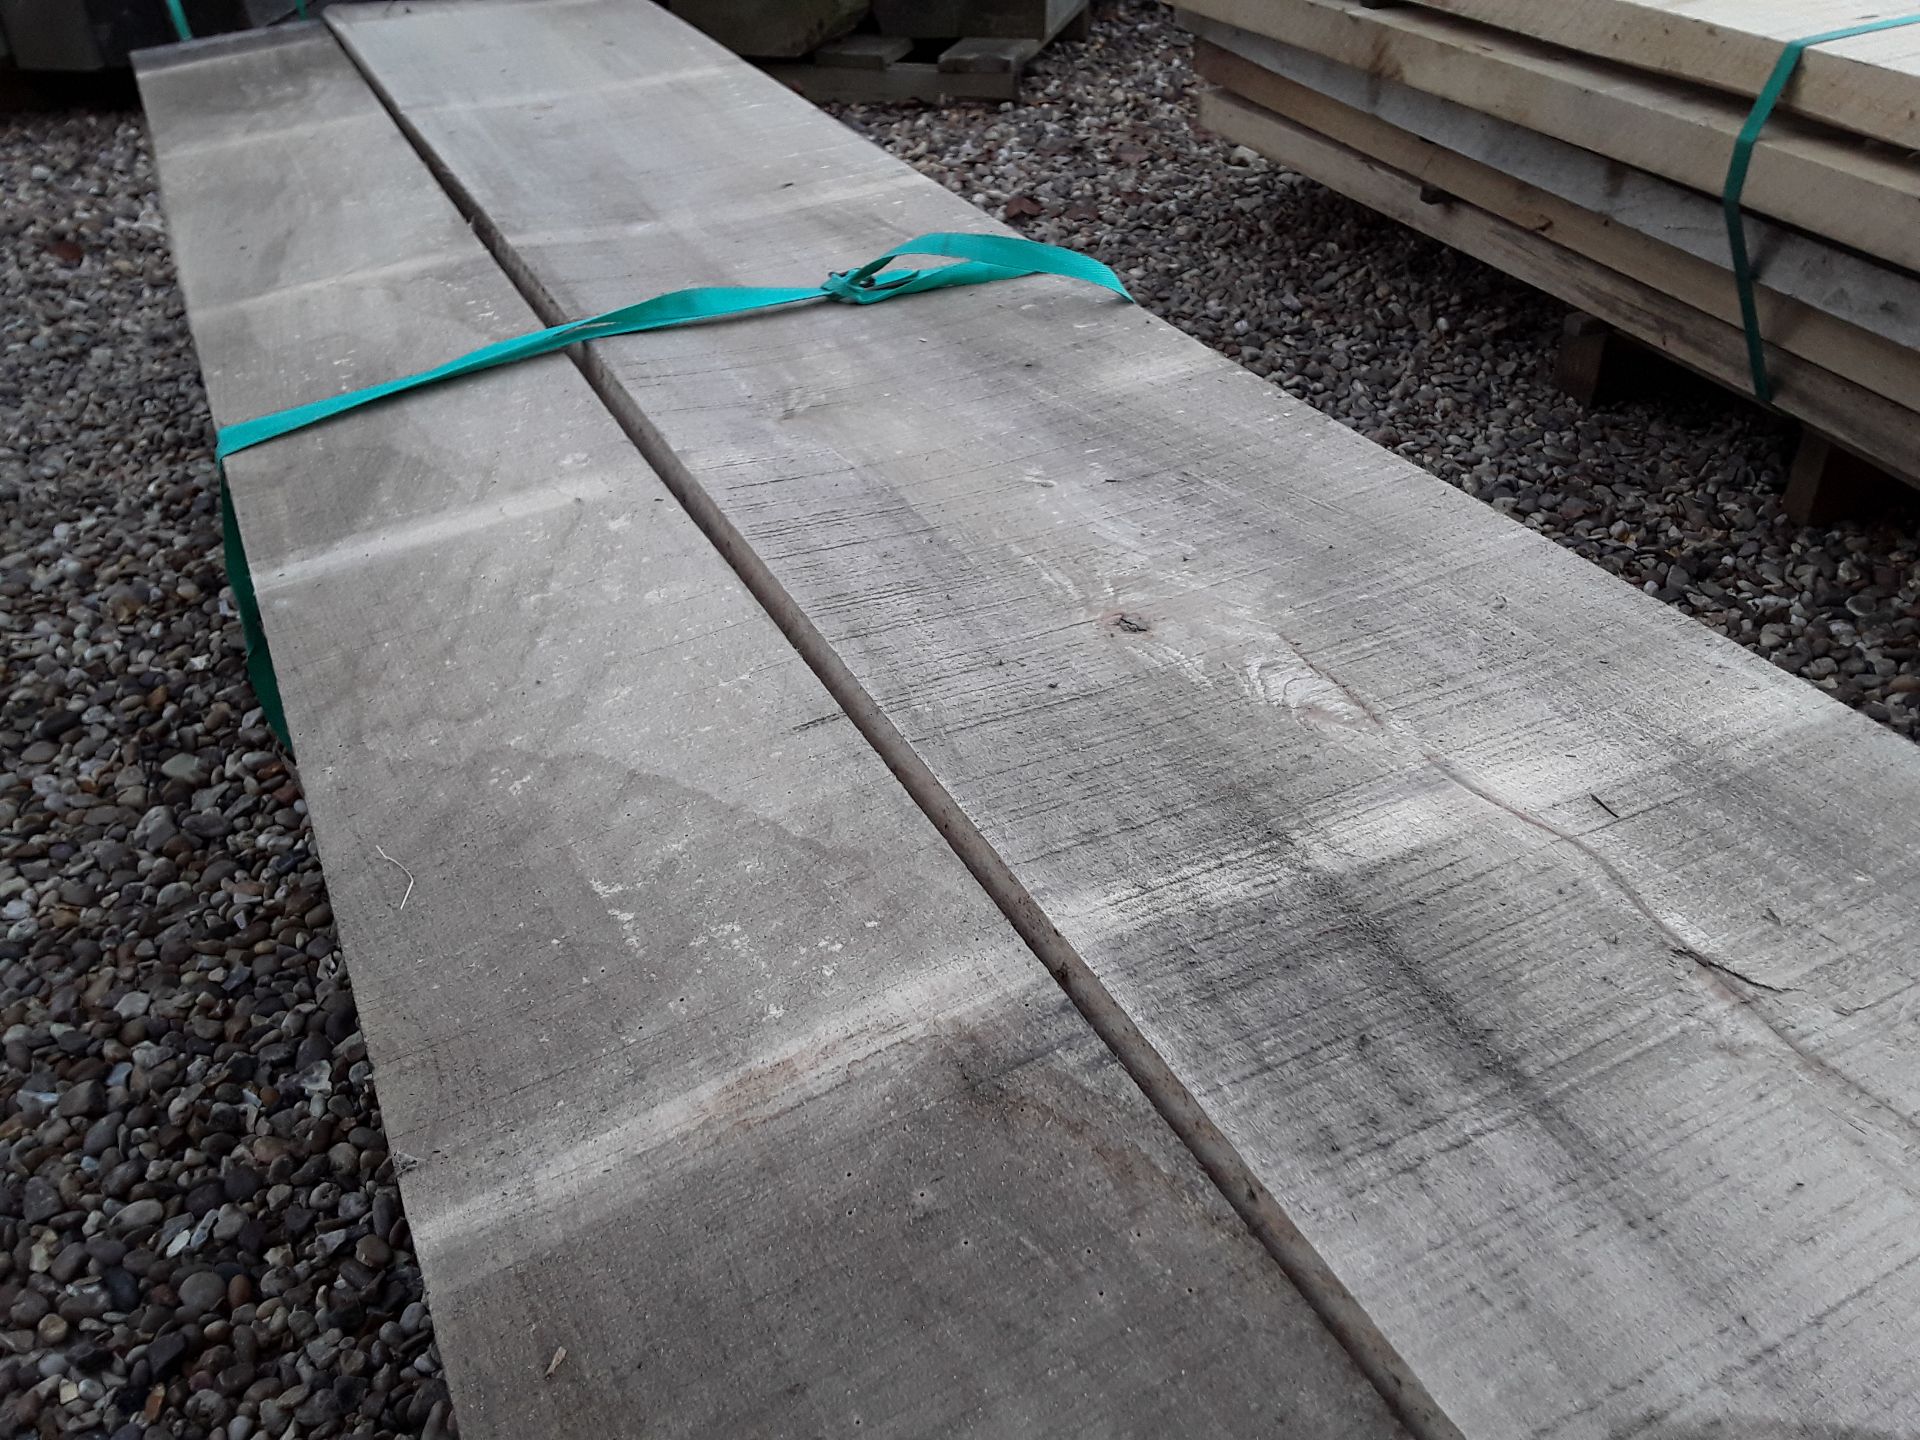 8x Hardwood Seasoned Sawn Timber Square Edged English Beech Boards / Slabs - Image 3 of 5